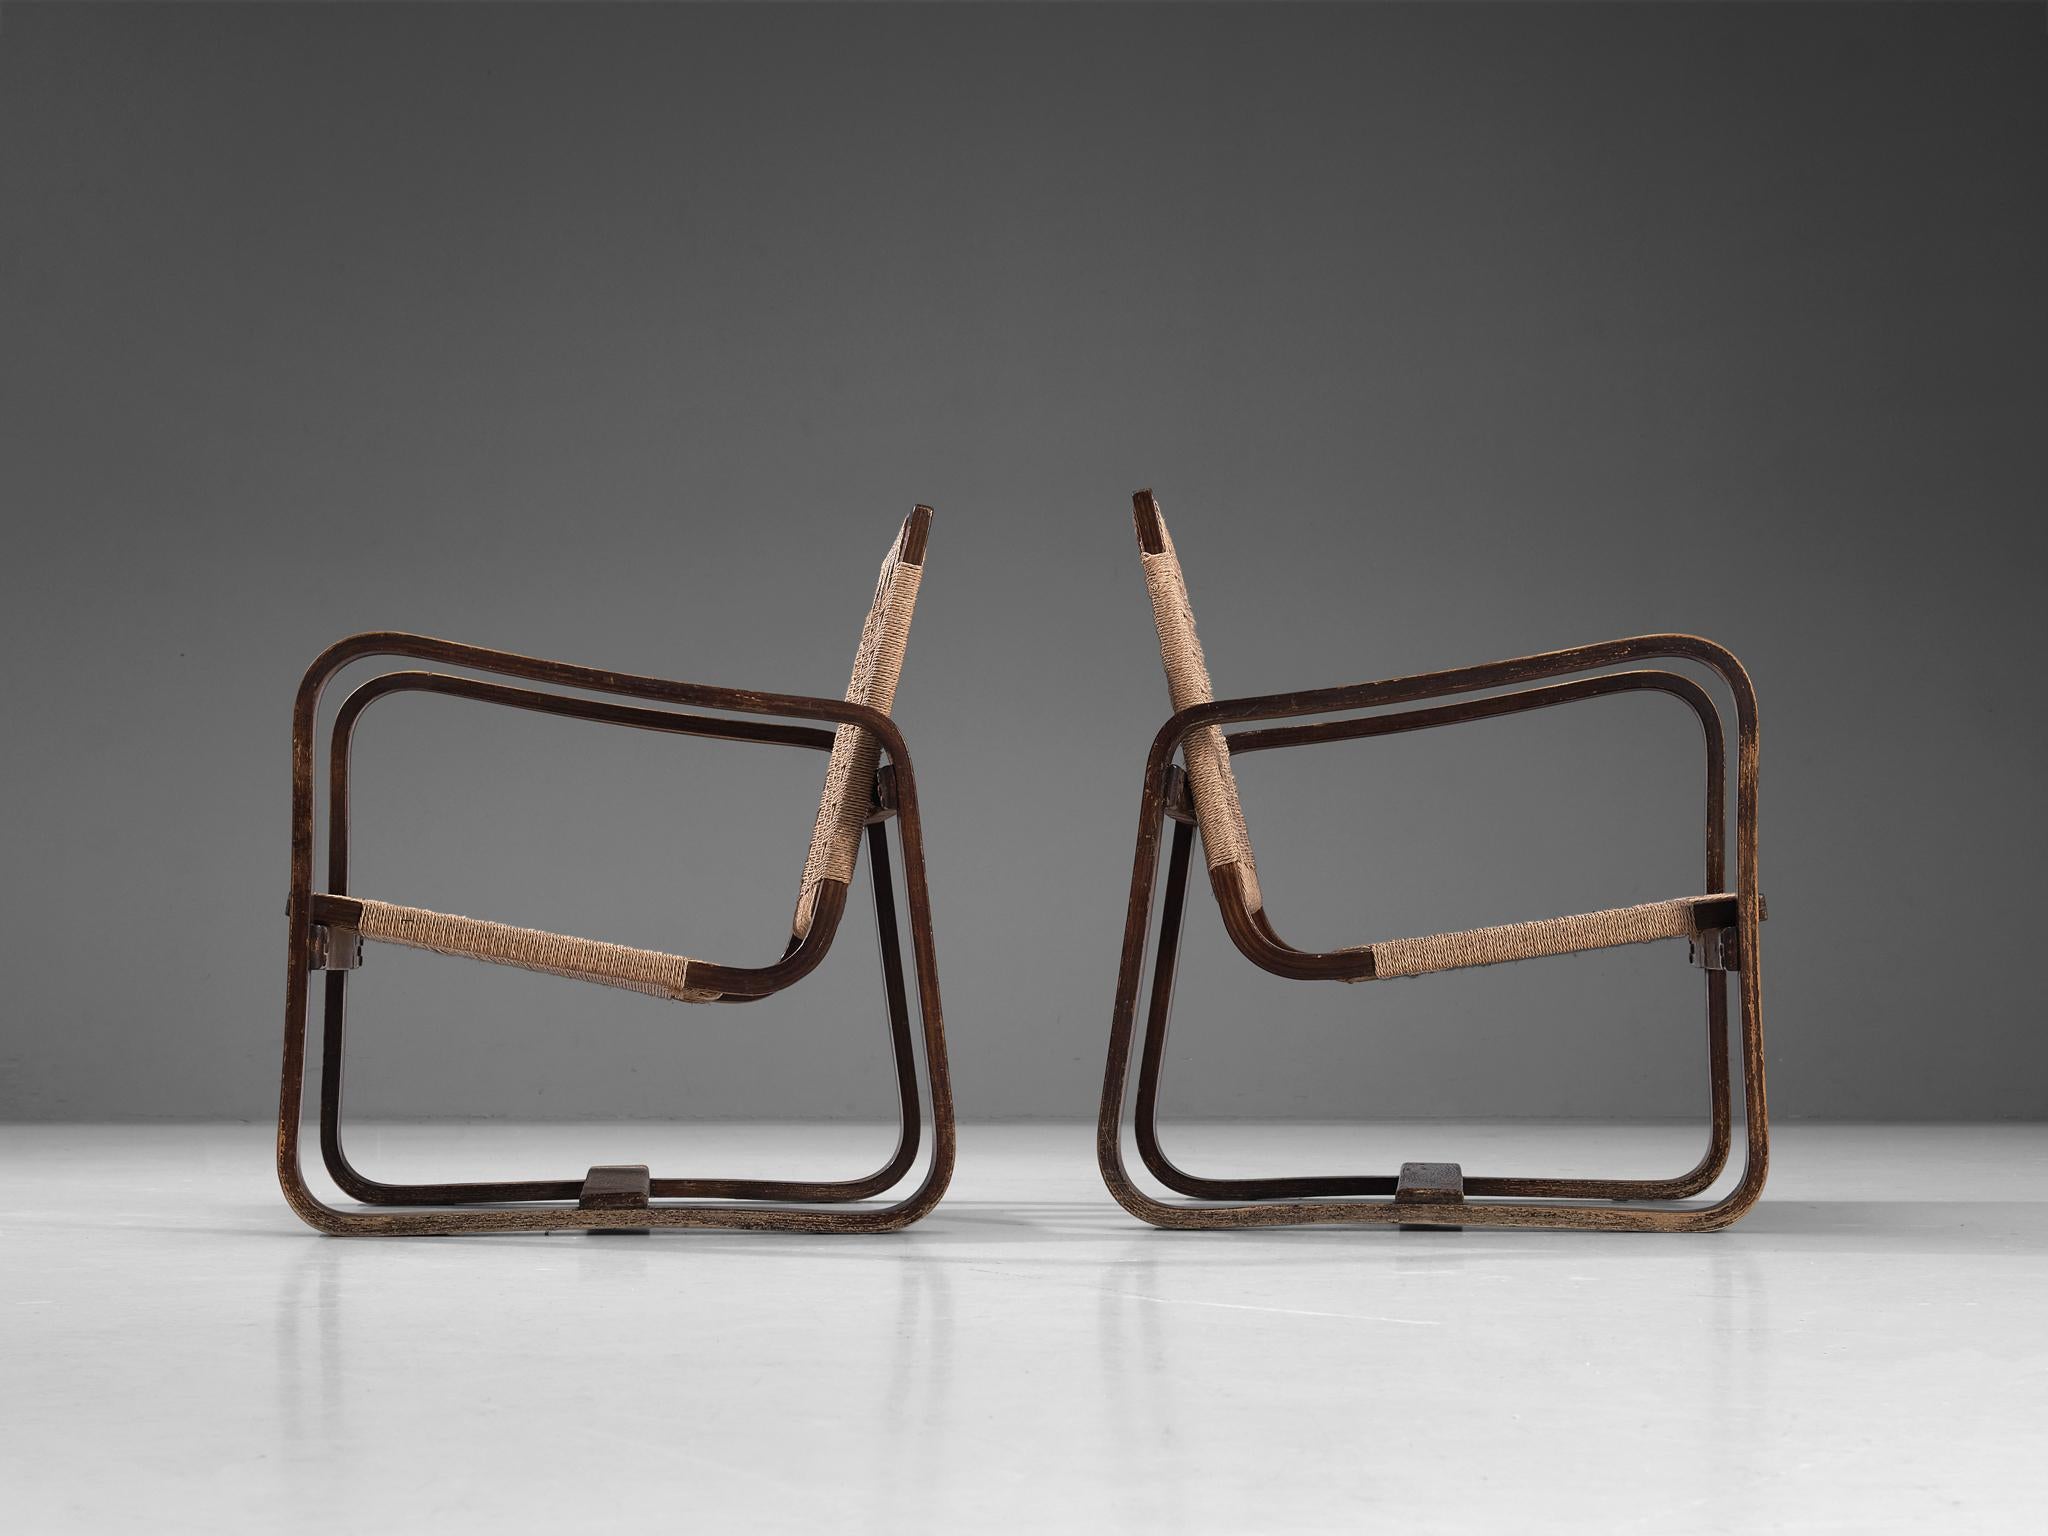 Italian Giuseppe Pagano Pogatschnig & Gino Maggioni Pair of Bentwood Lounge Chairs